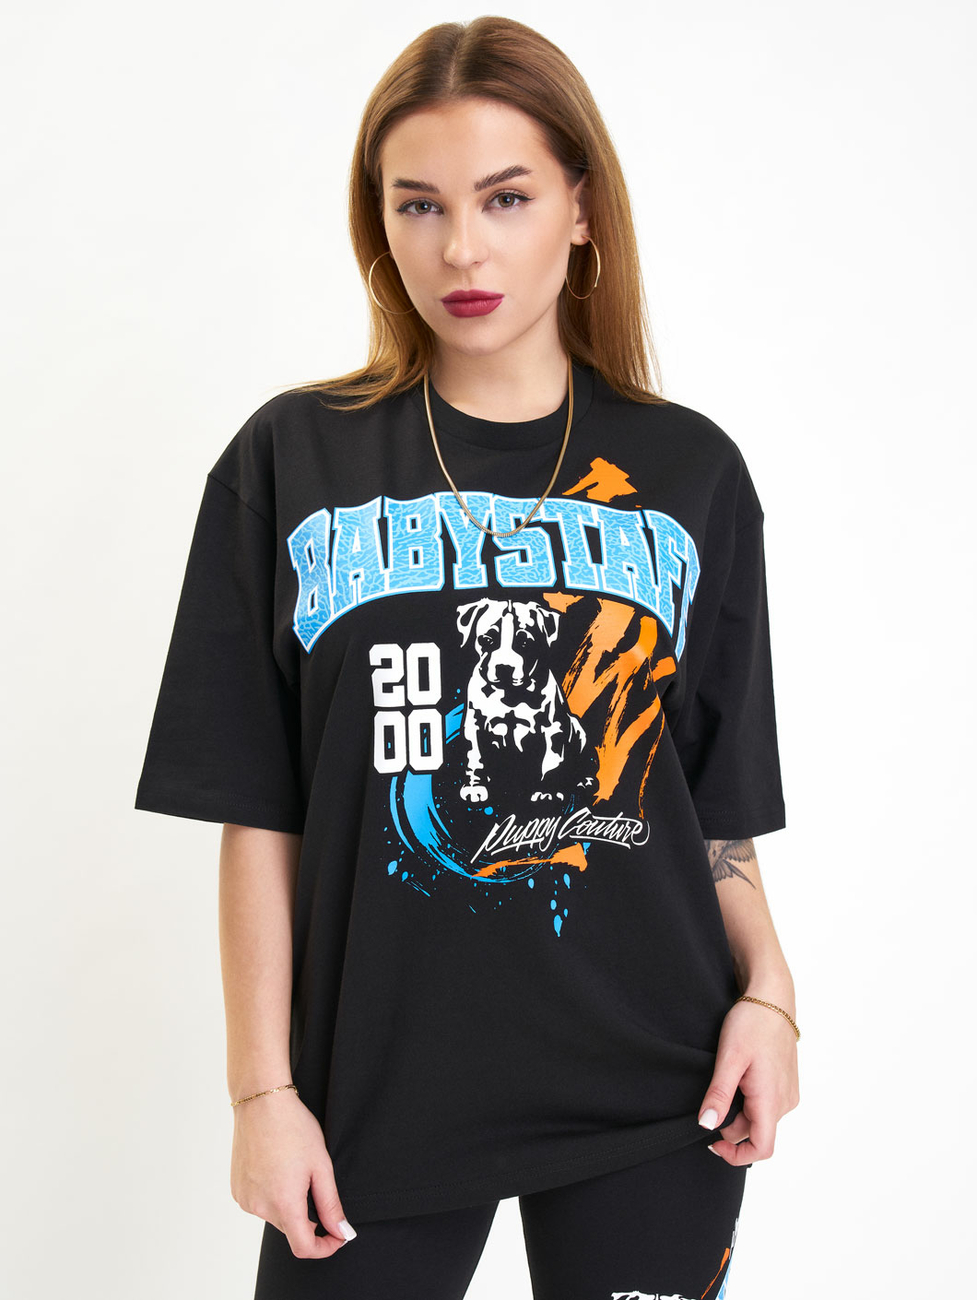 Babystaff Trello Oversize T-Shirt XL